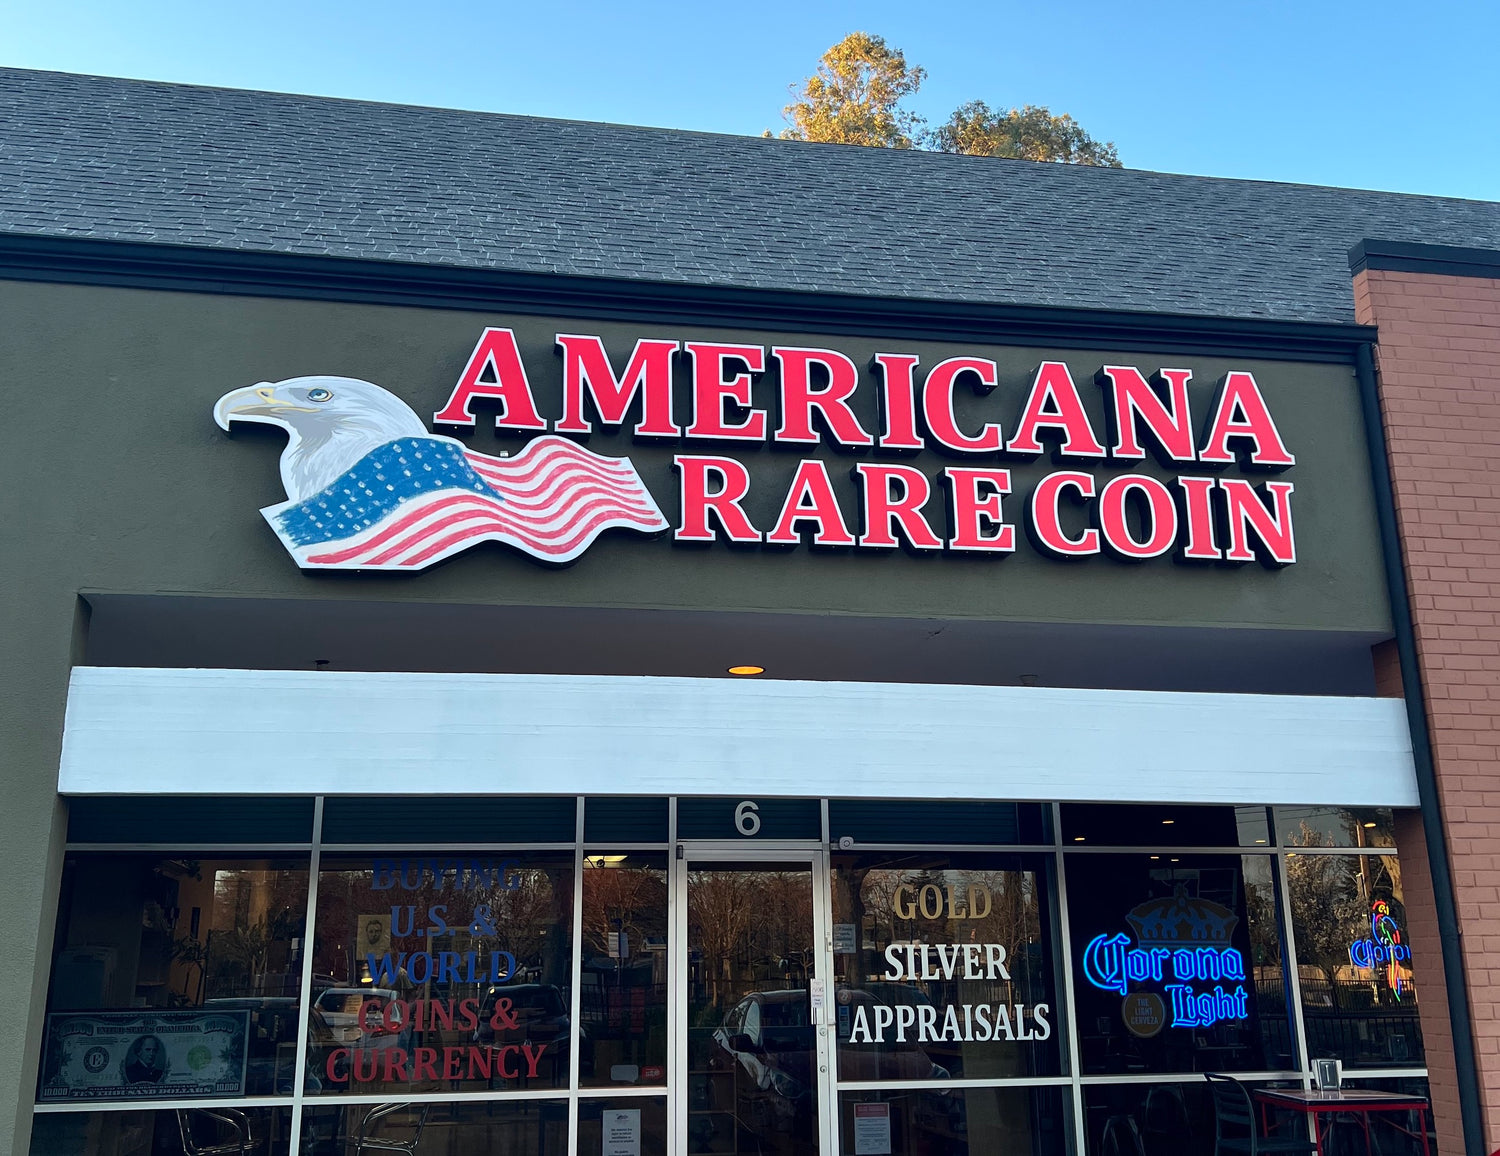 Americana Rare Coin storefront